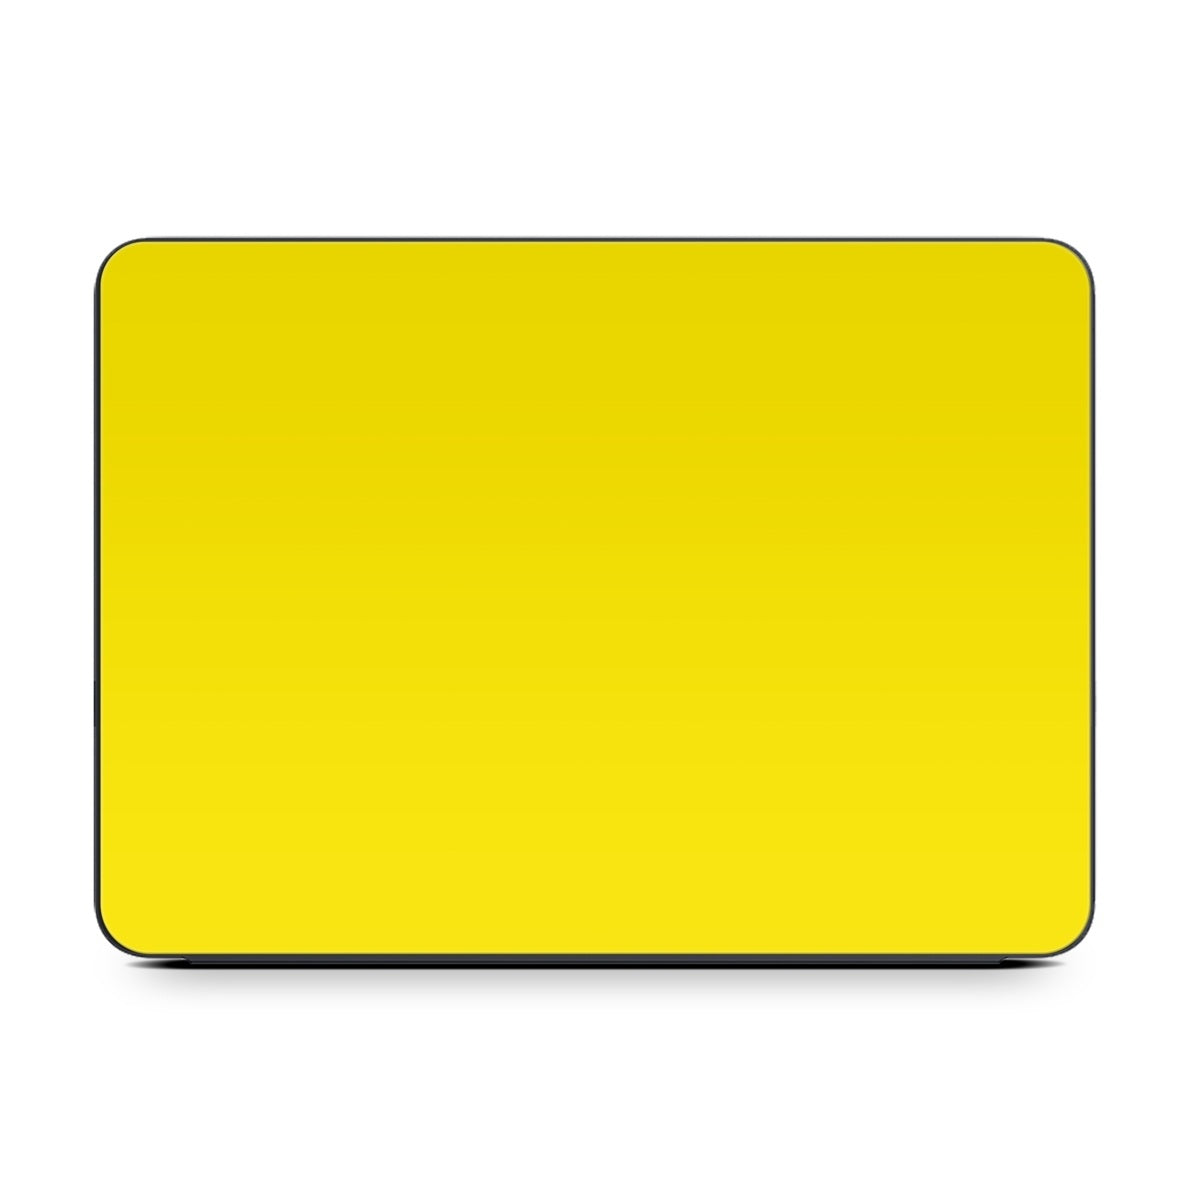 Solid State Yellow - Apple Smart Keyboard Folio Skin